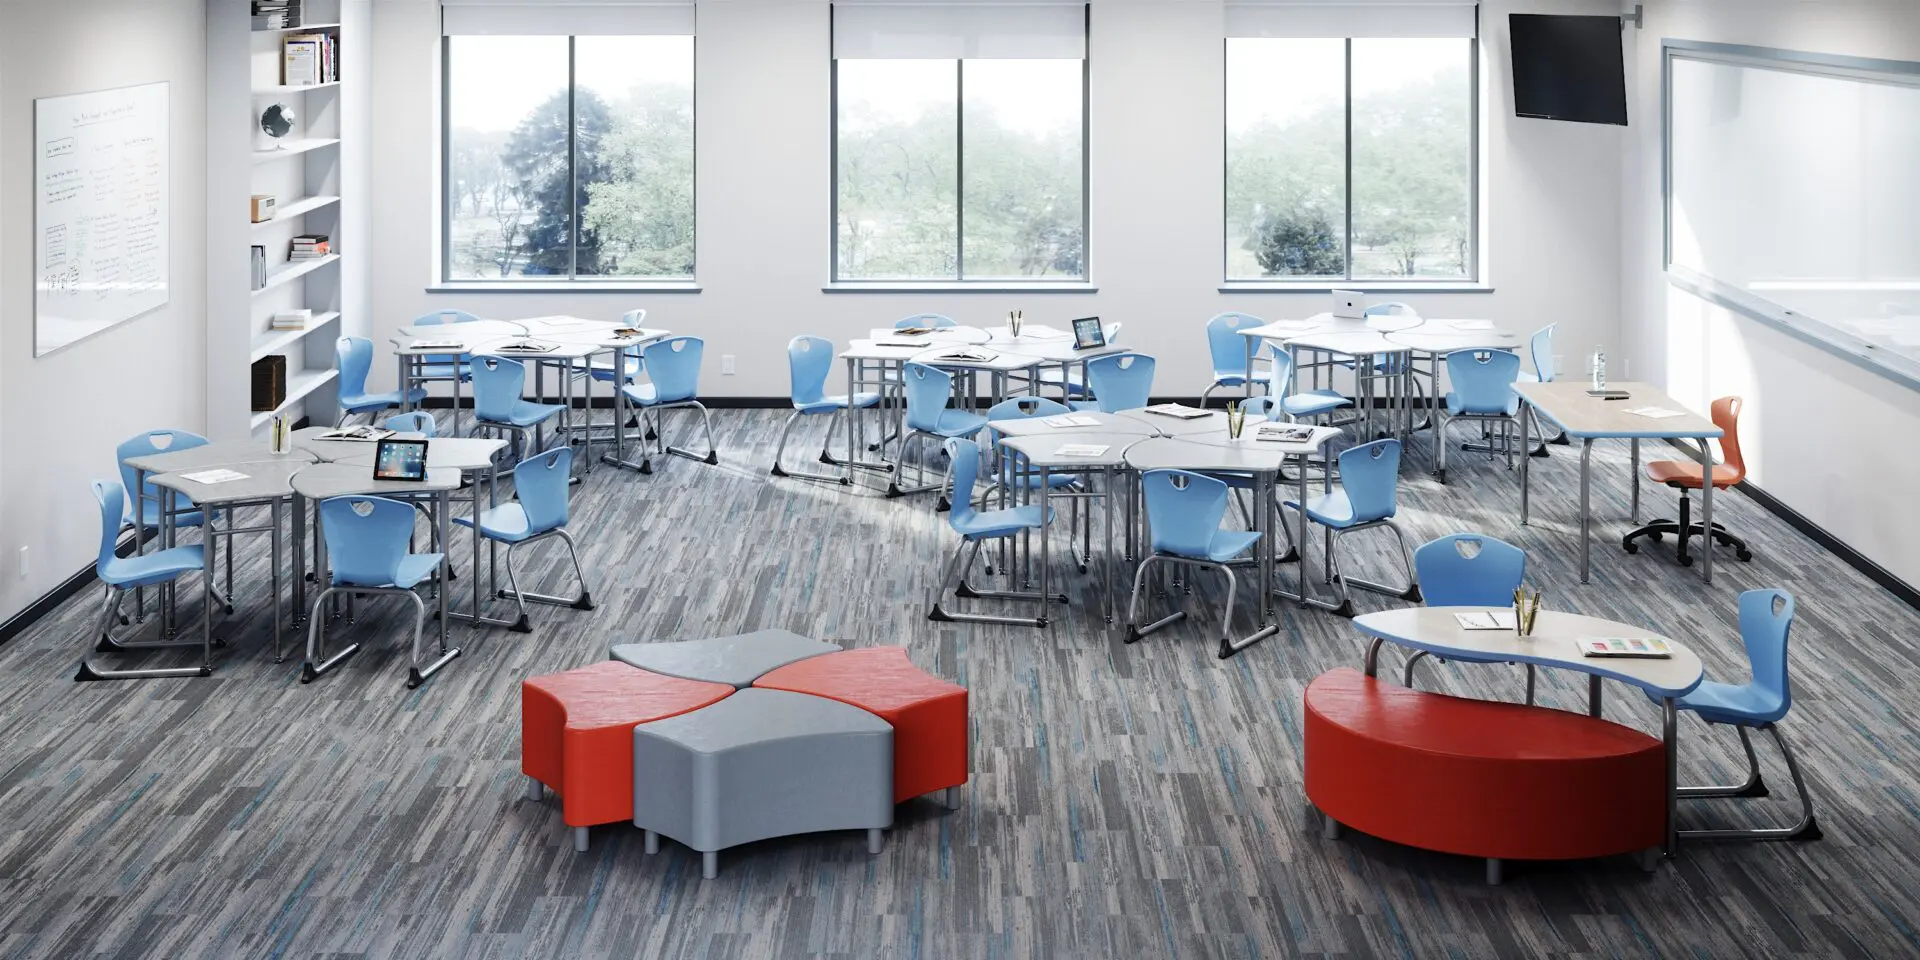 Classroom - Vertebrae 4300 Desk